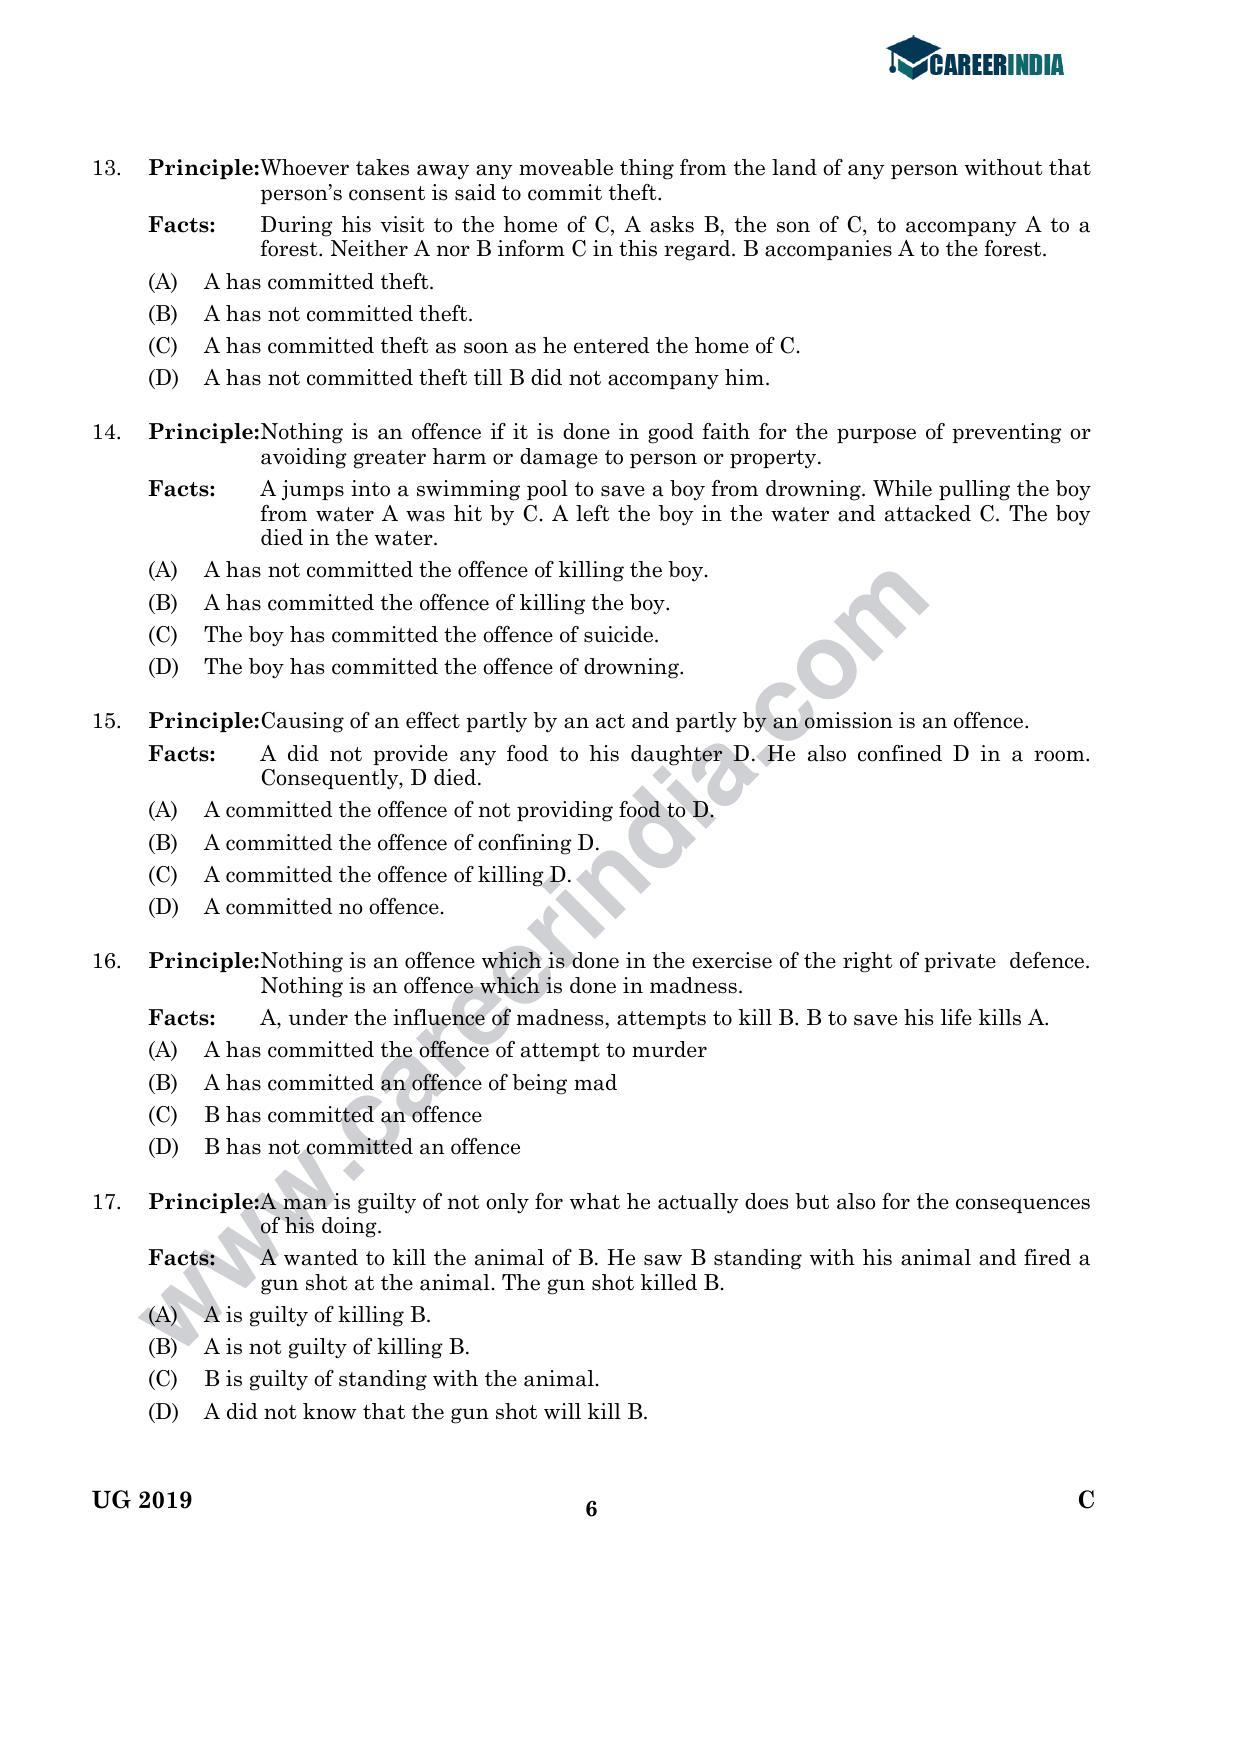 CLAT 2019 UG Legal-Aptitude Question Paper - Page 5